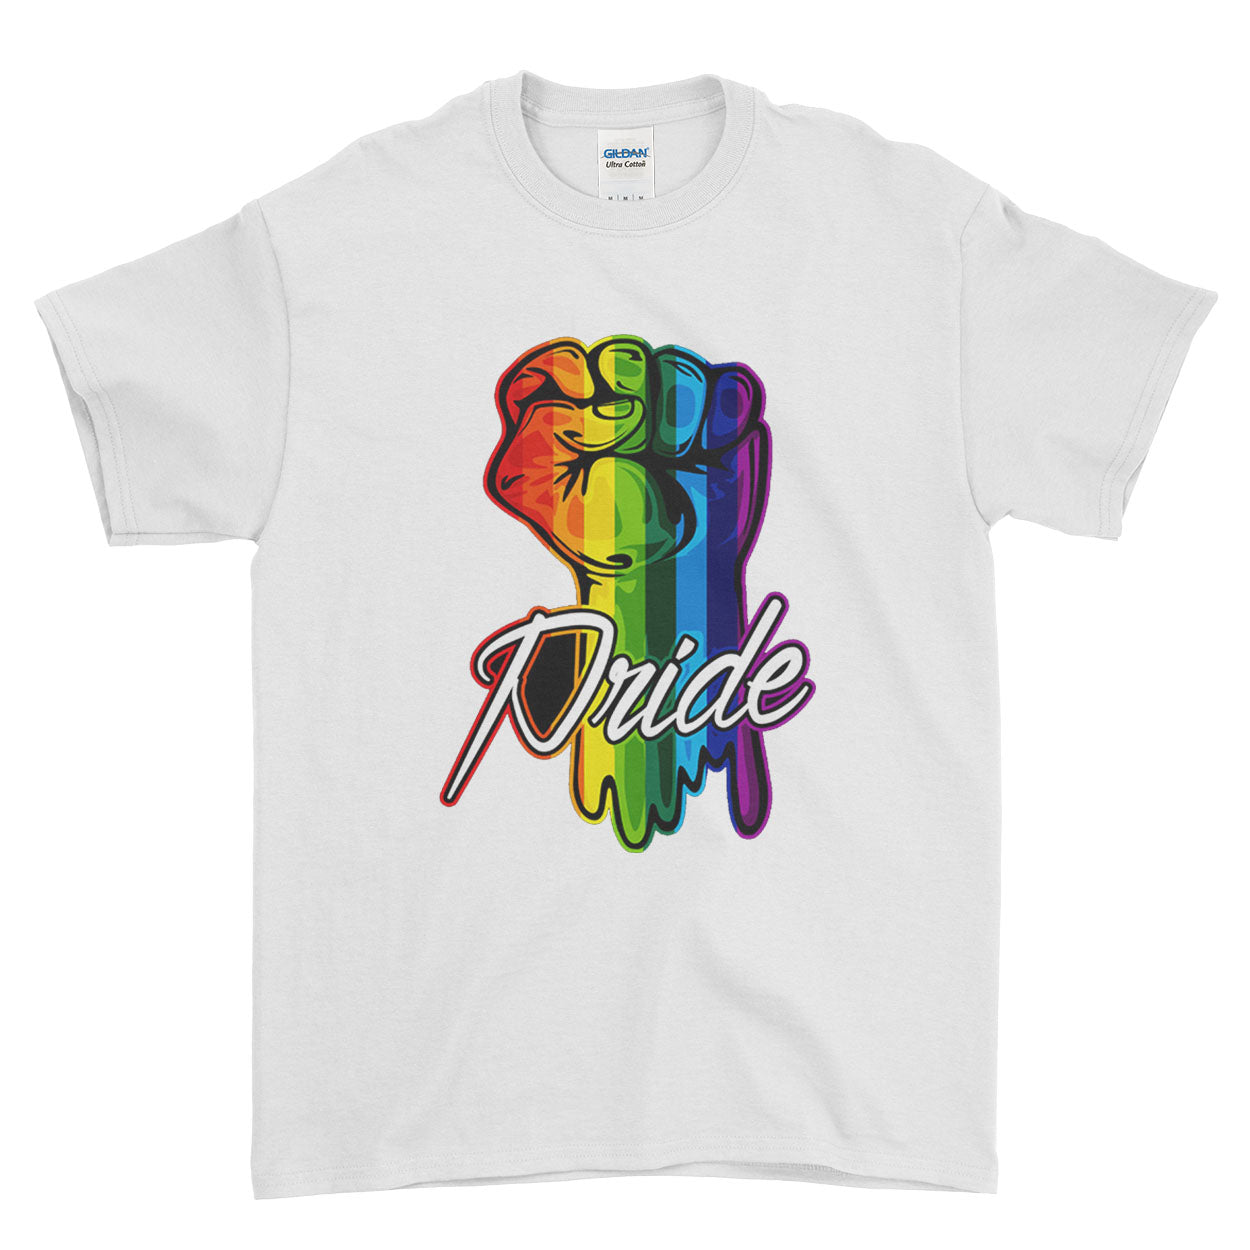 where to buy gay pride shirts